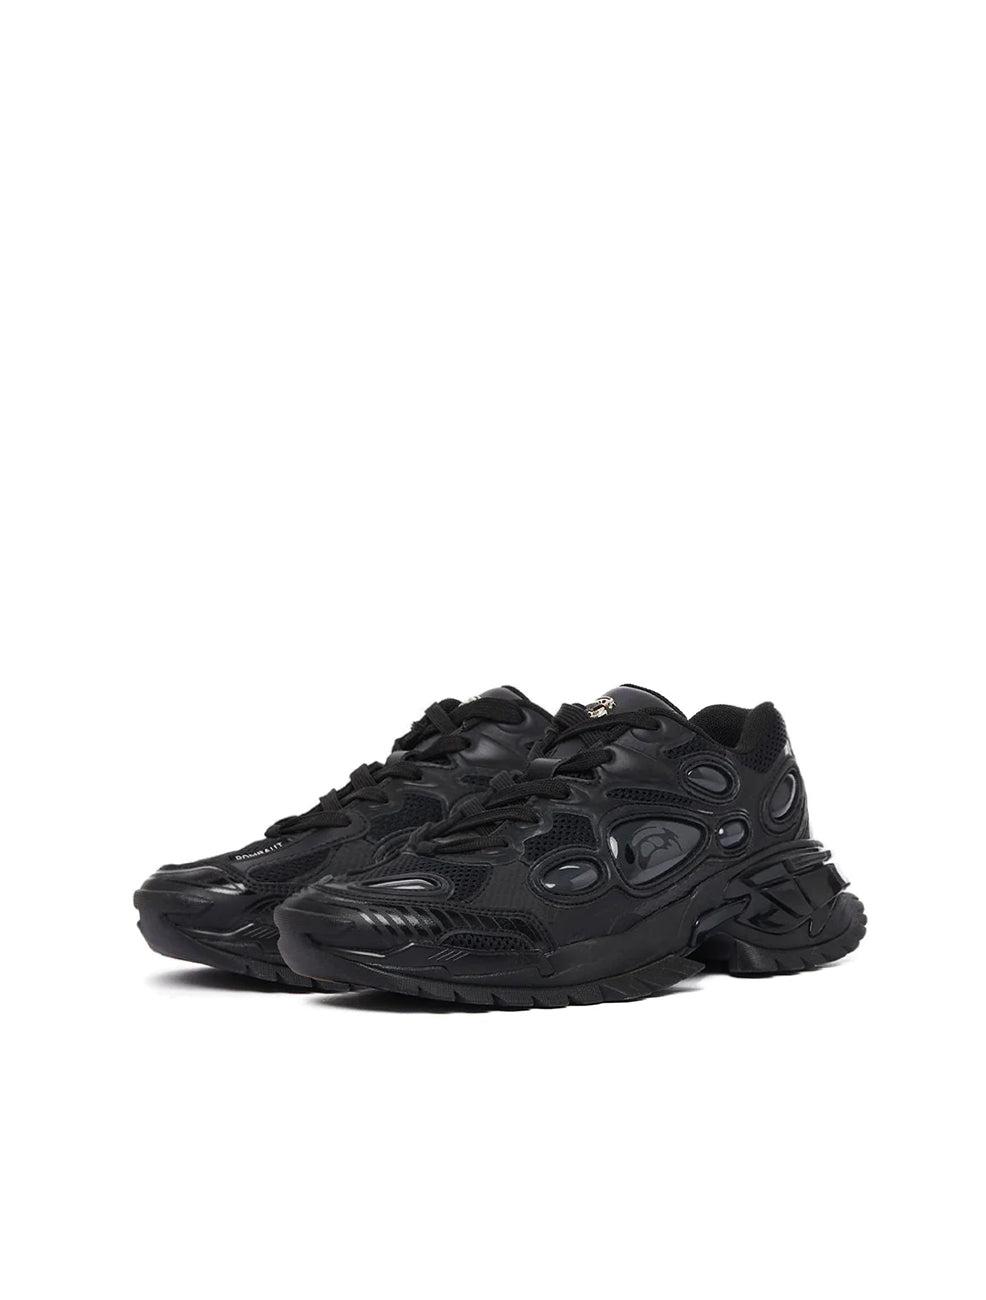 Rombaut Nucleo Volcanic Black Sneakers | Lyst